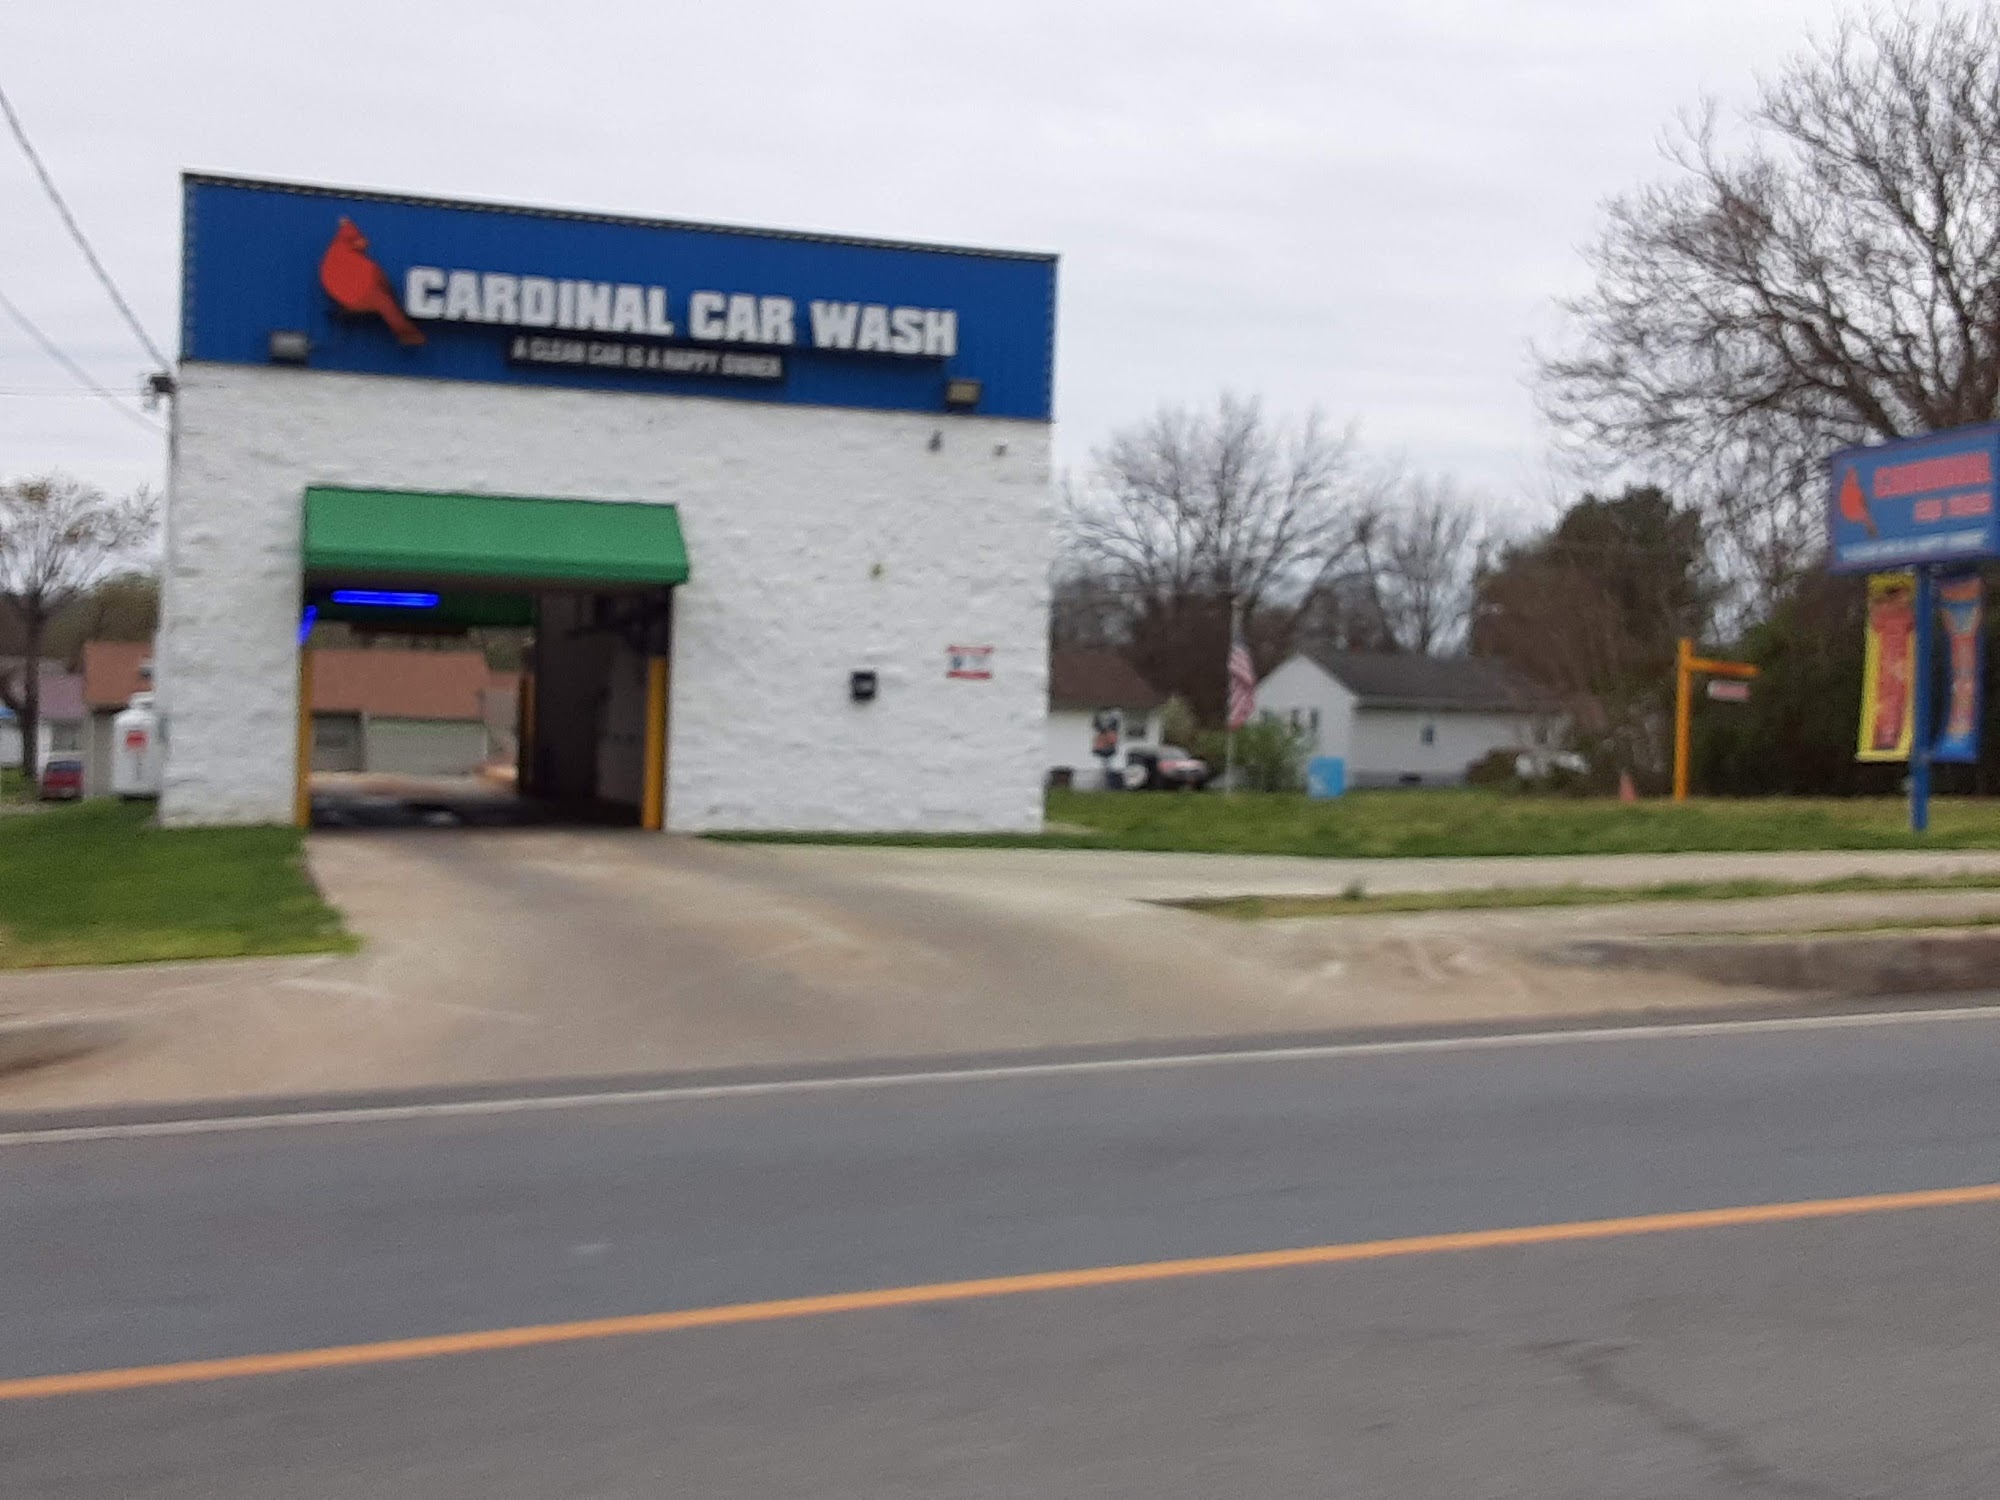 Cardinal Car Wash 621 Main St, Altavista Virginia 24517